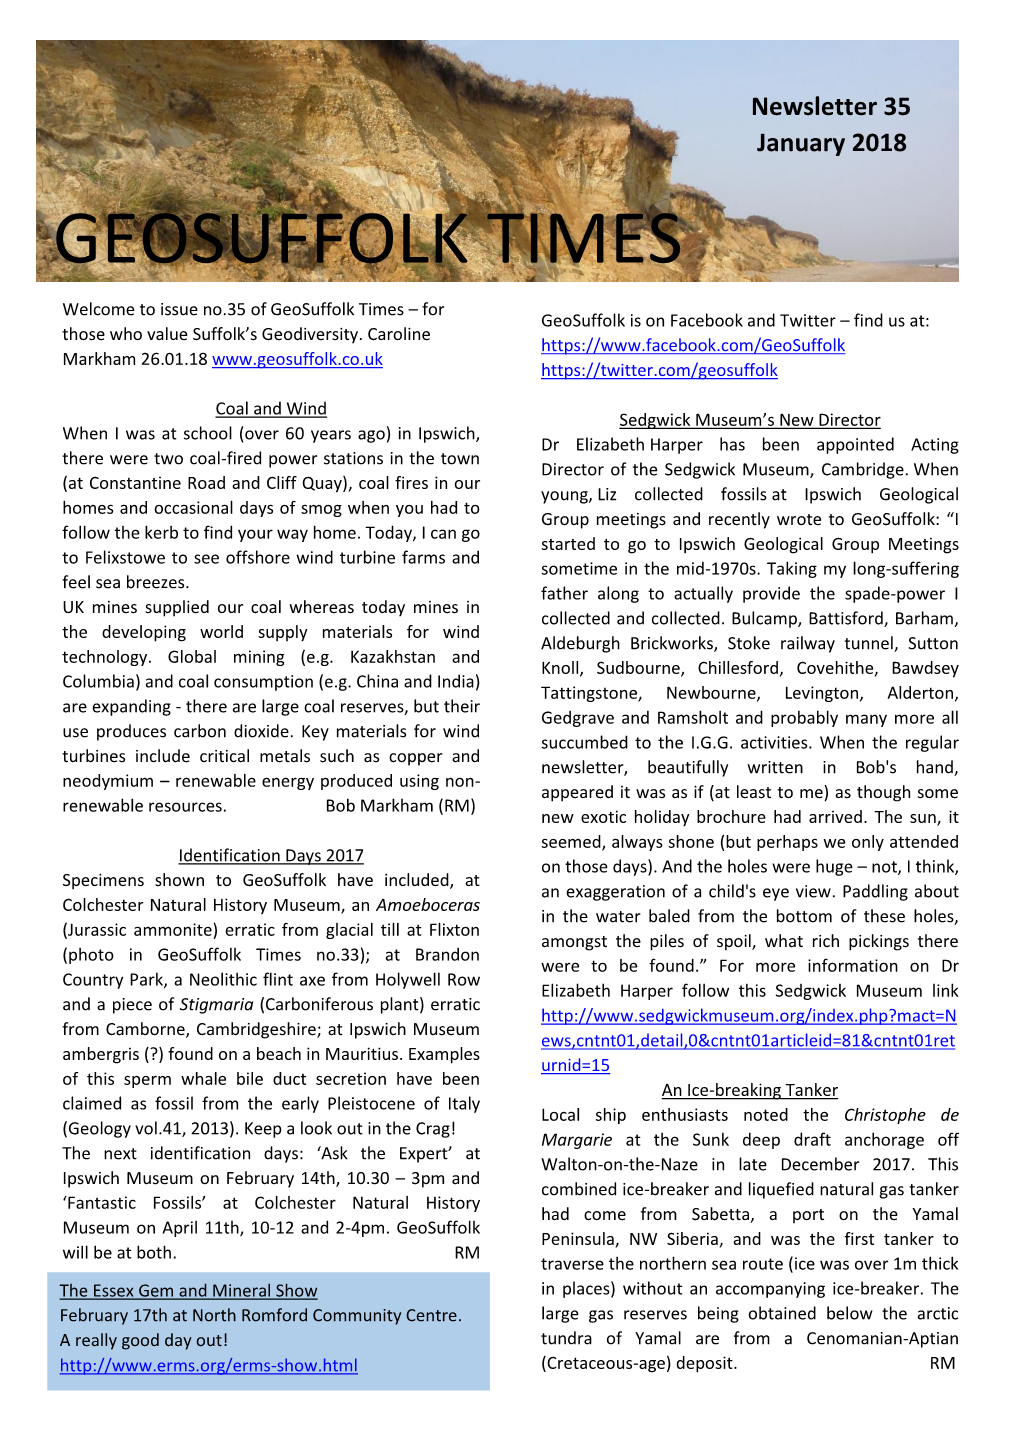 Geosuffolk Times 35